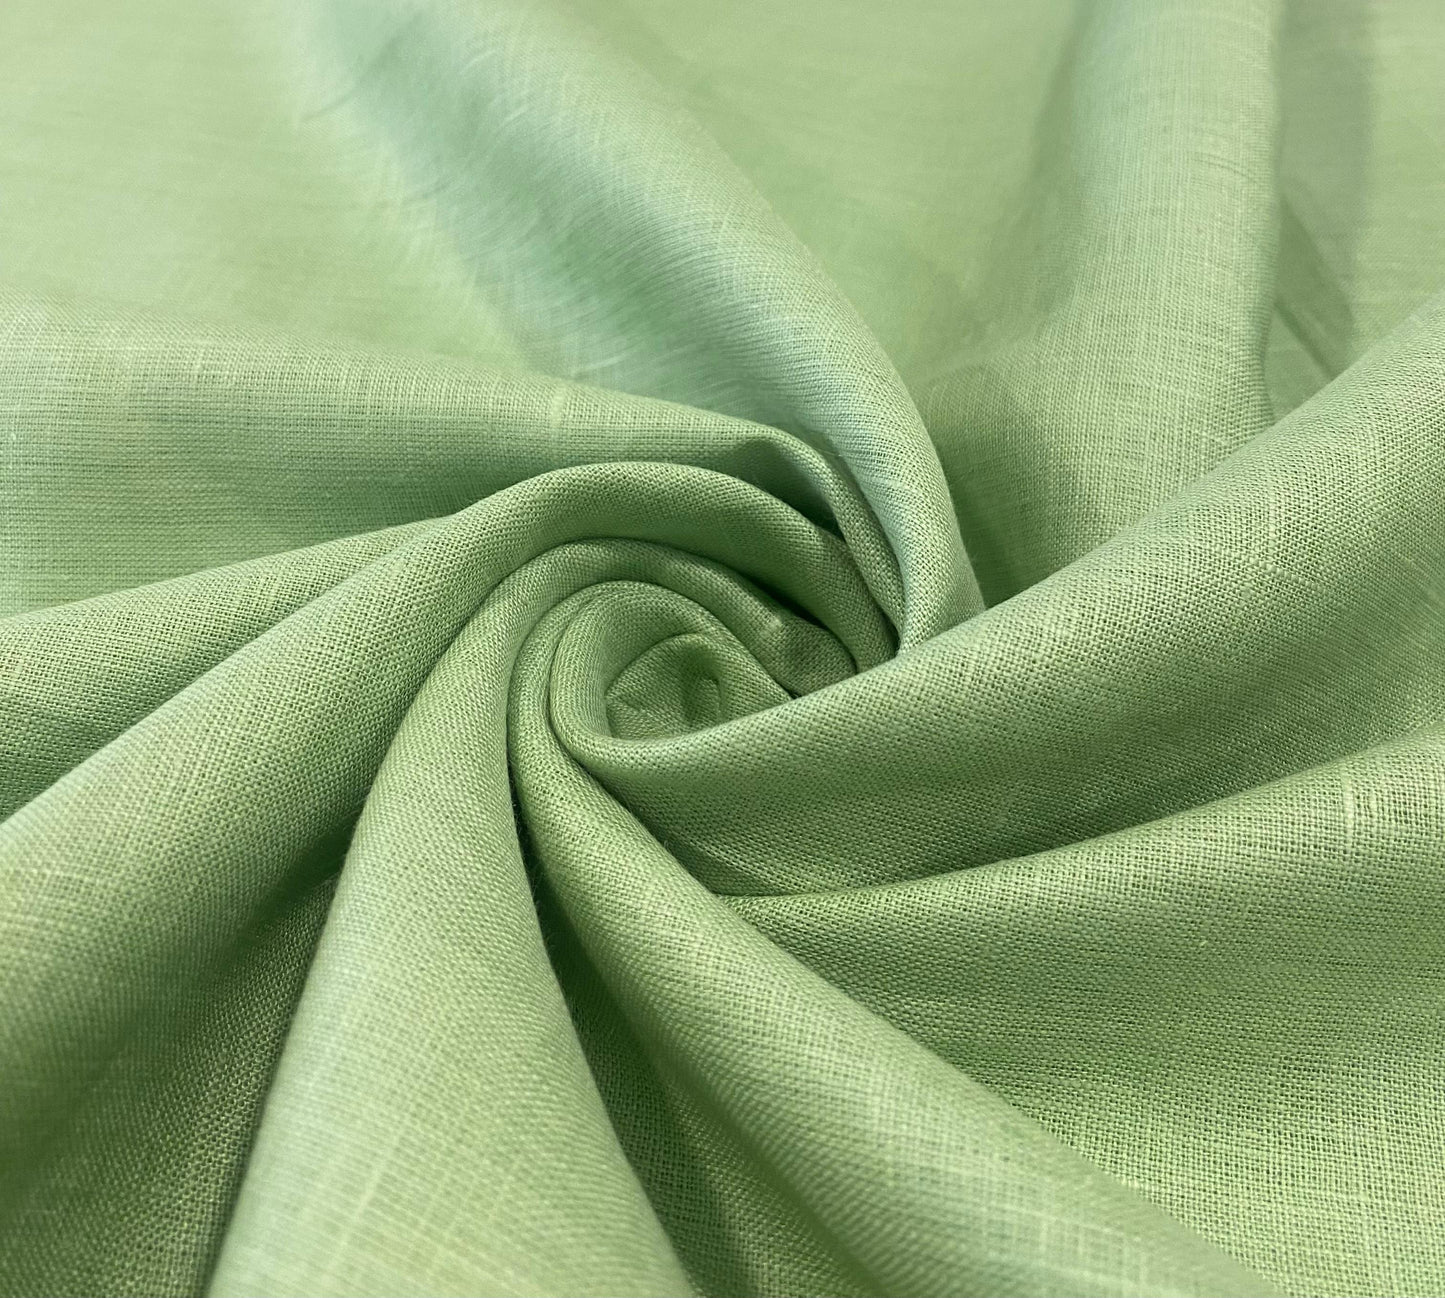 Celadon Green Solid Colour- Dyed Premium Linen Fabric LO-162